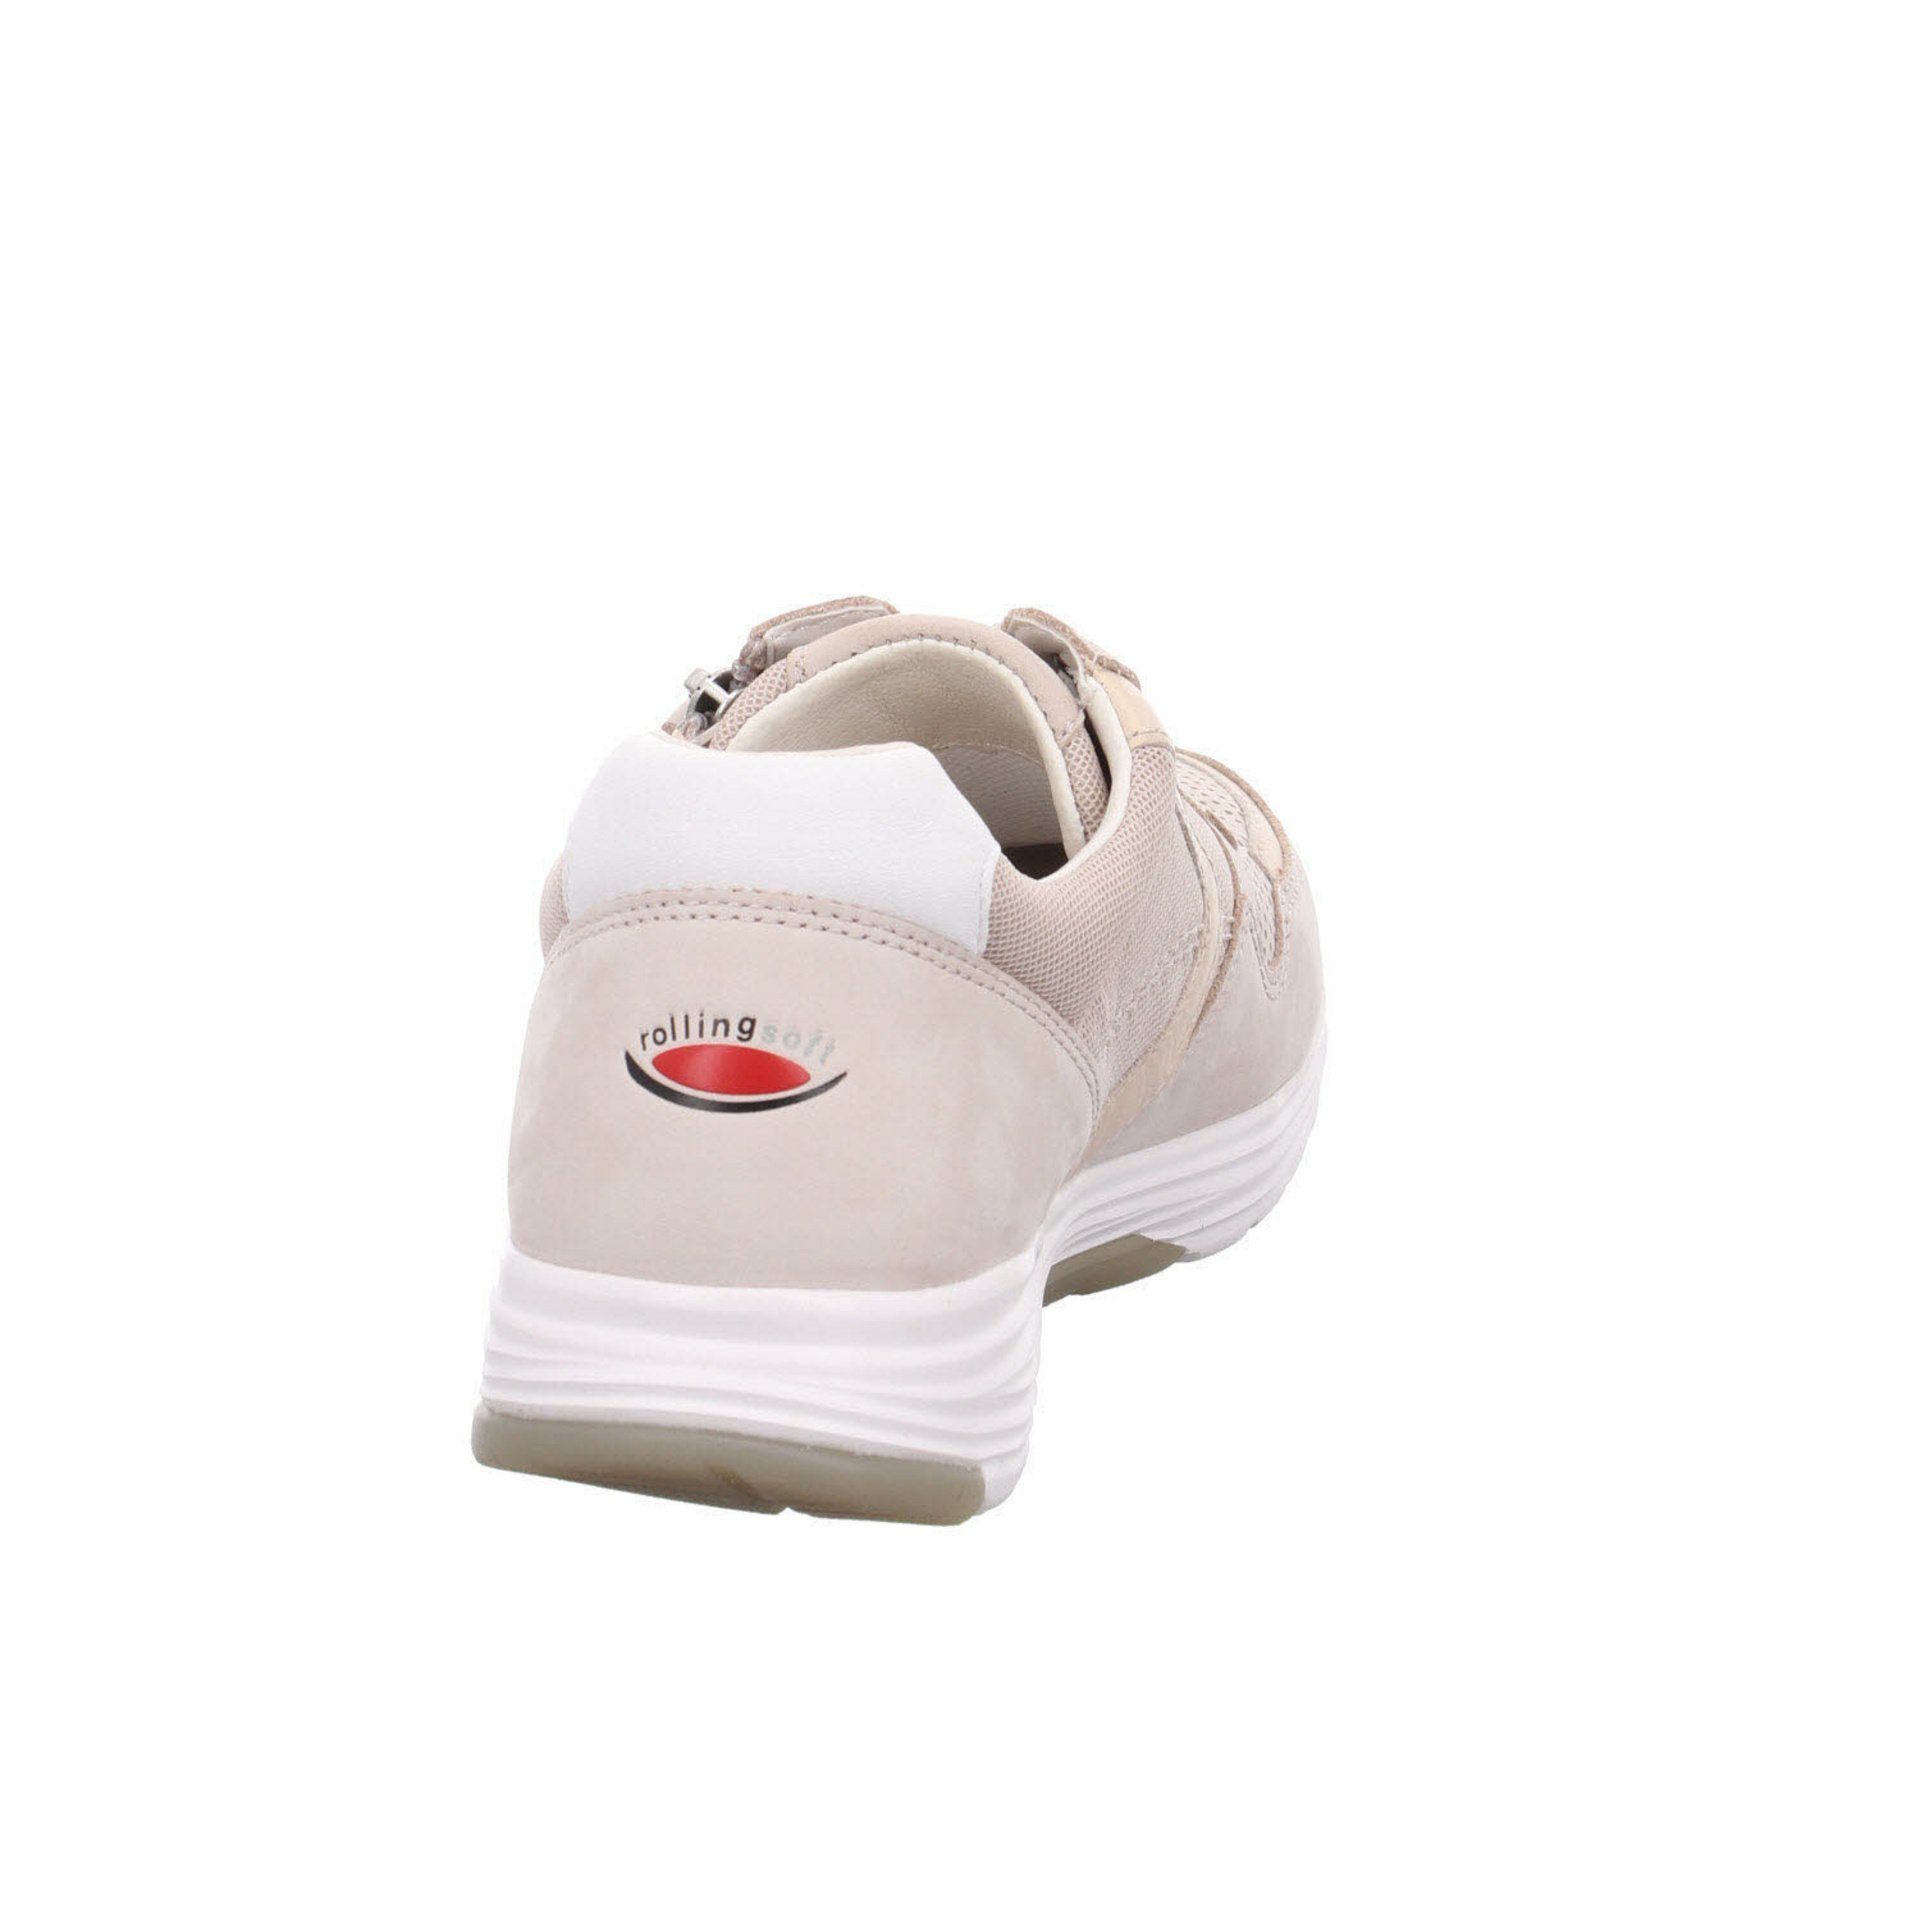 Gabor Damen Sneaker Schuhe (puder.weiss) Beige Rollingsoft Sneaker Schnürschuh Leder-/Textilkombination